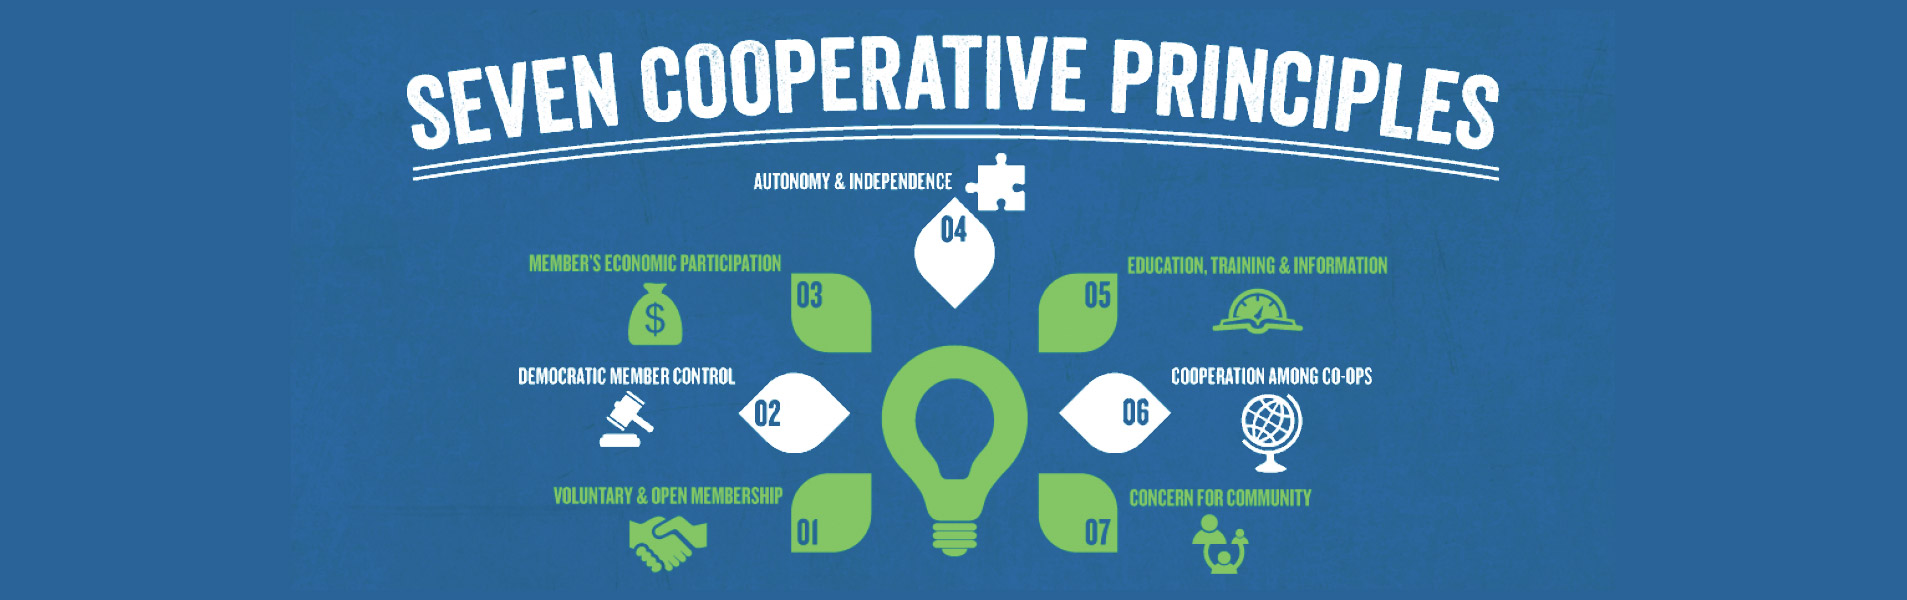 7 cooperative principles